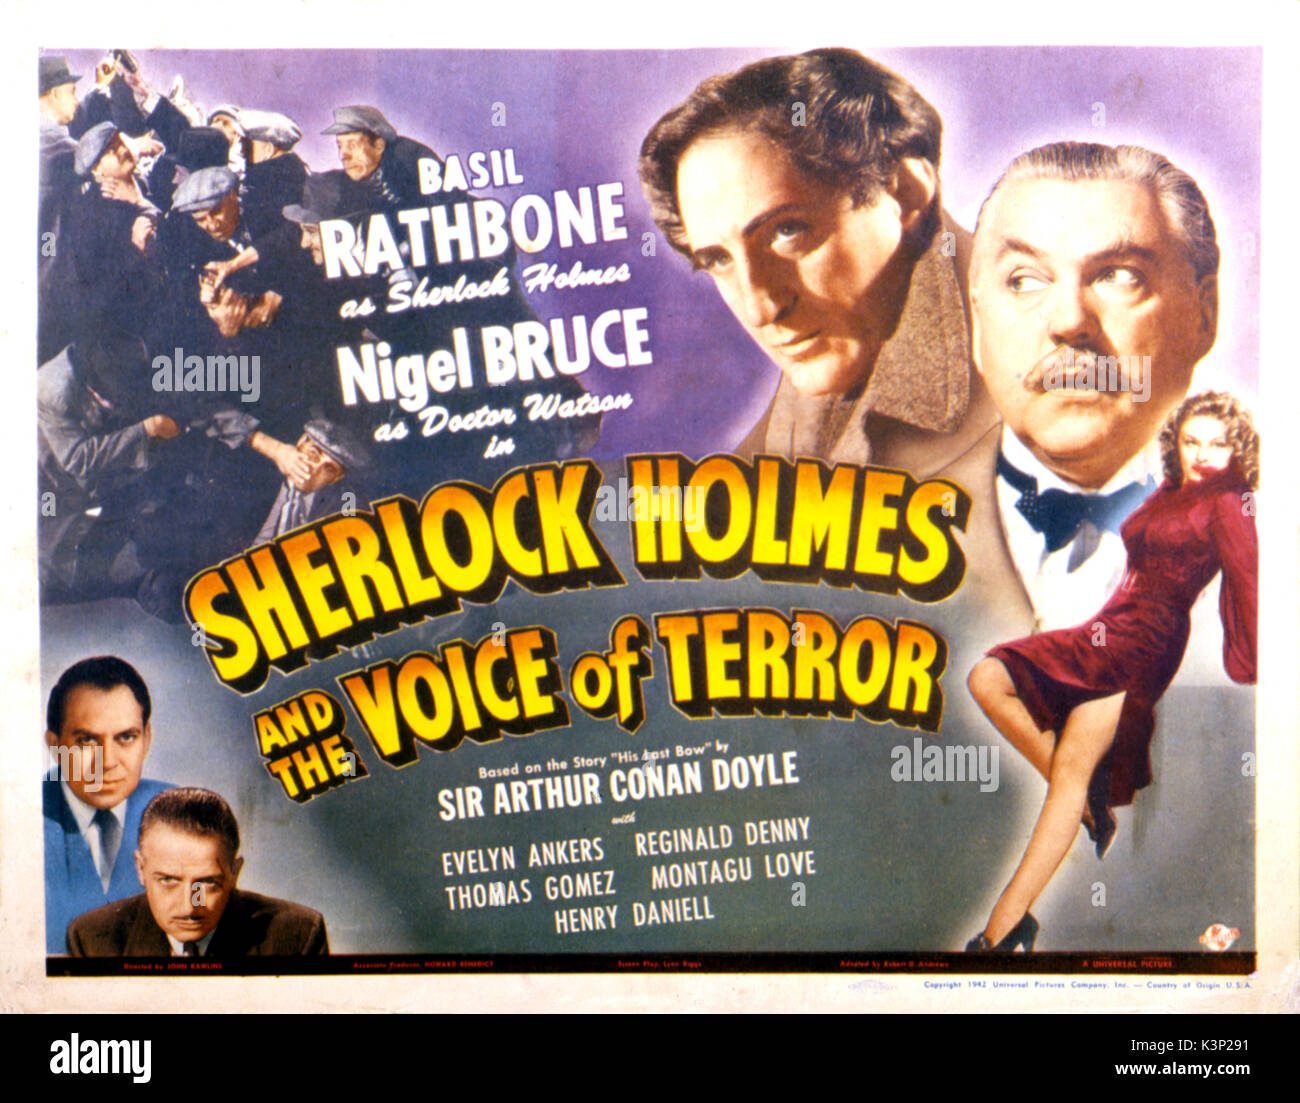 SHERLOCK HOLMES AND THE VOICE OF TERROR [US 1942] BASIL RATHBONE as Sherlock Holmes, NIGEL BRUCE as Doctor Watson     Date: 1942 Stock Photo